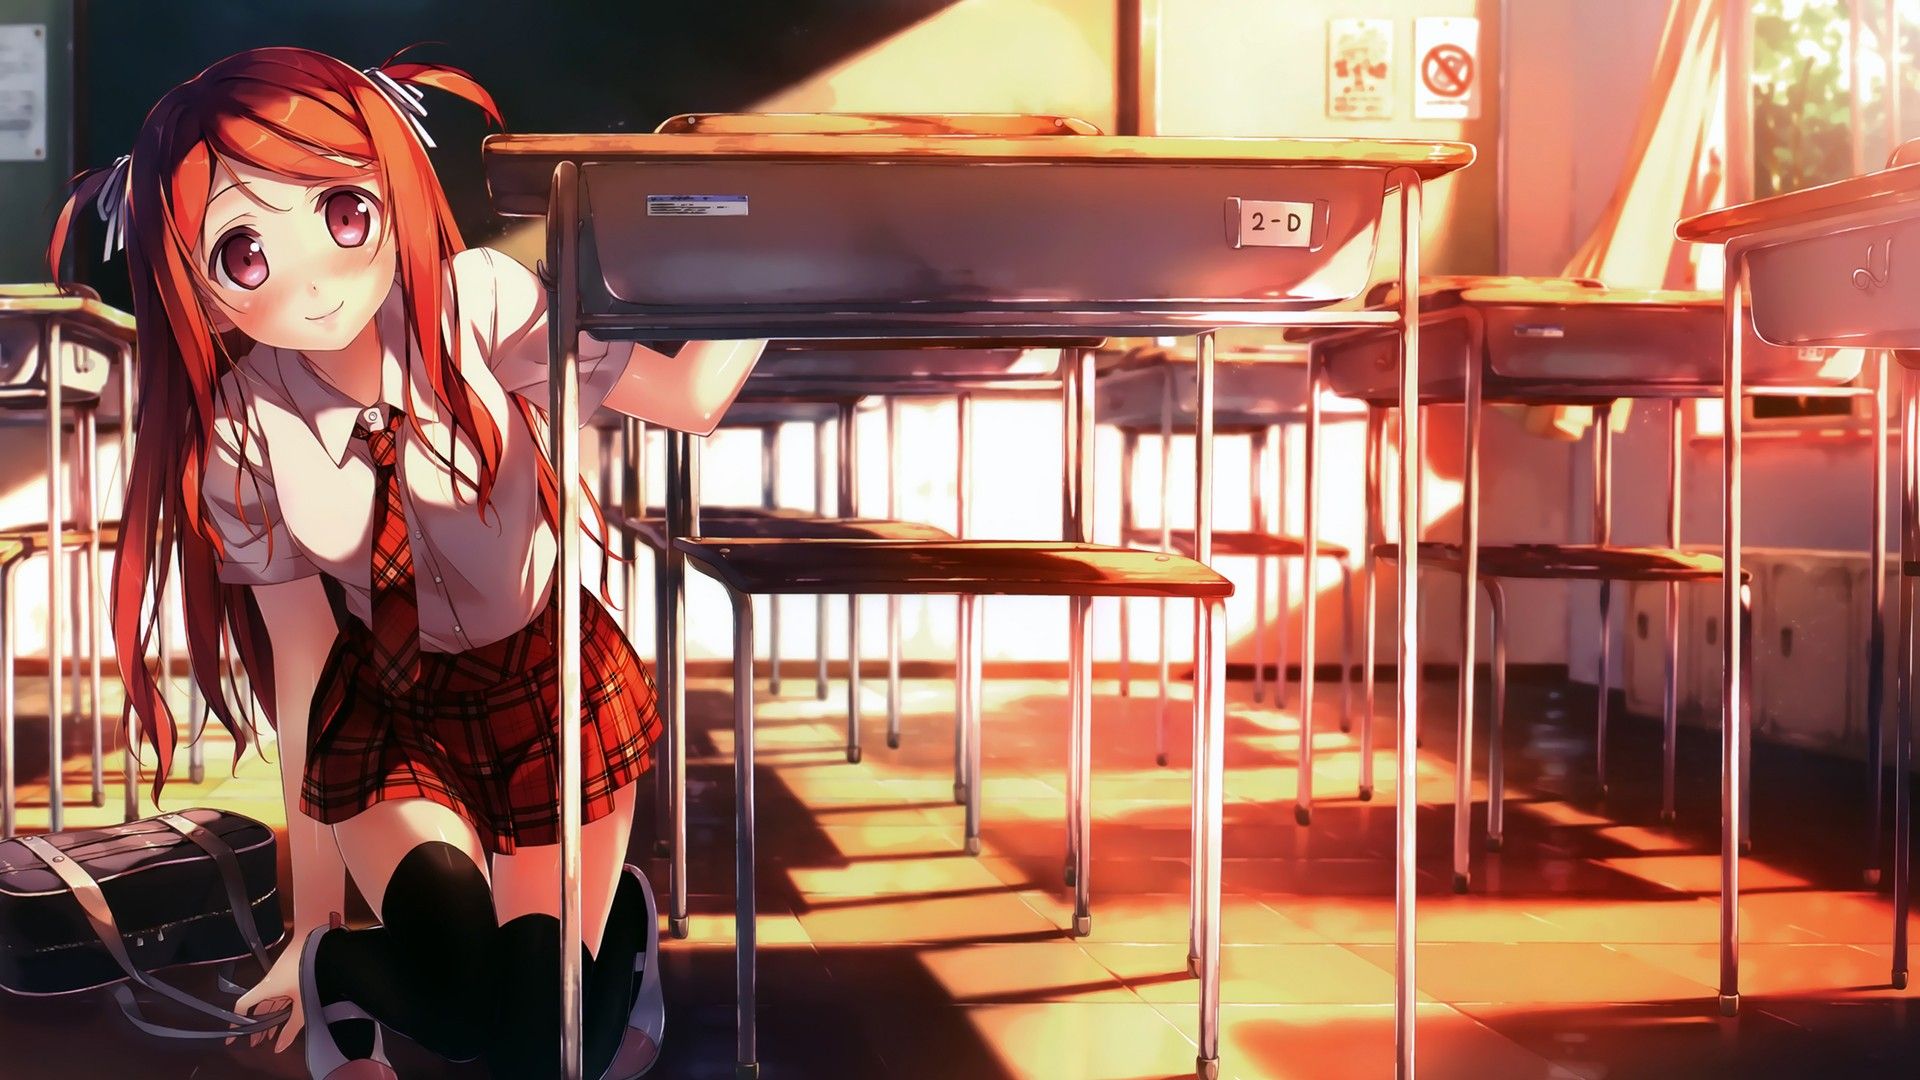 HD desktop wallpaper: Anime, Girl, School, Classroom download free